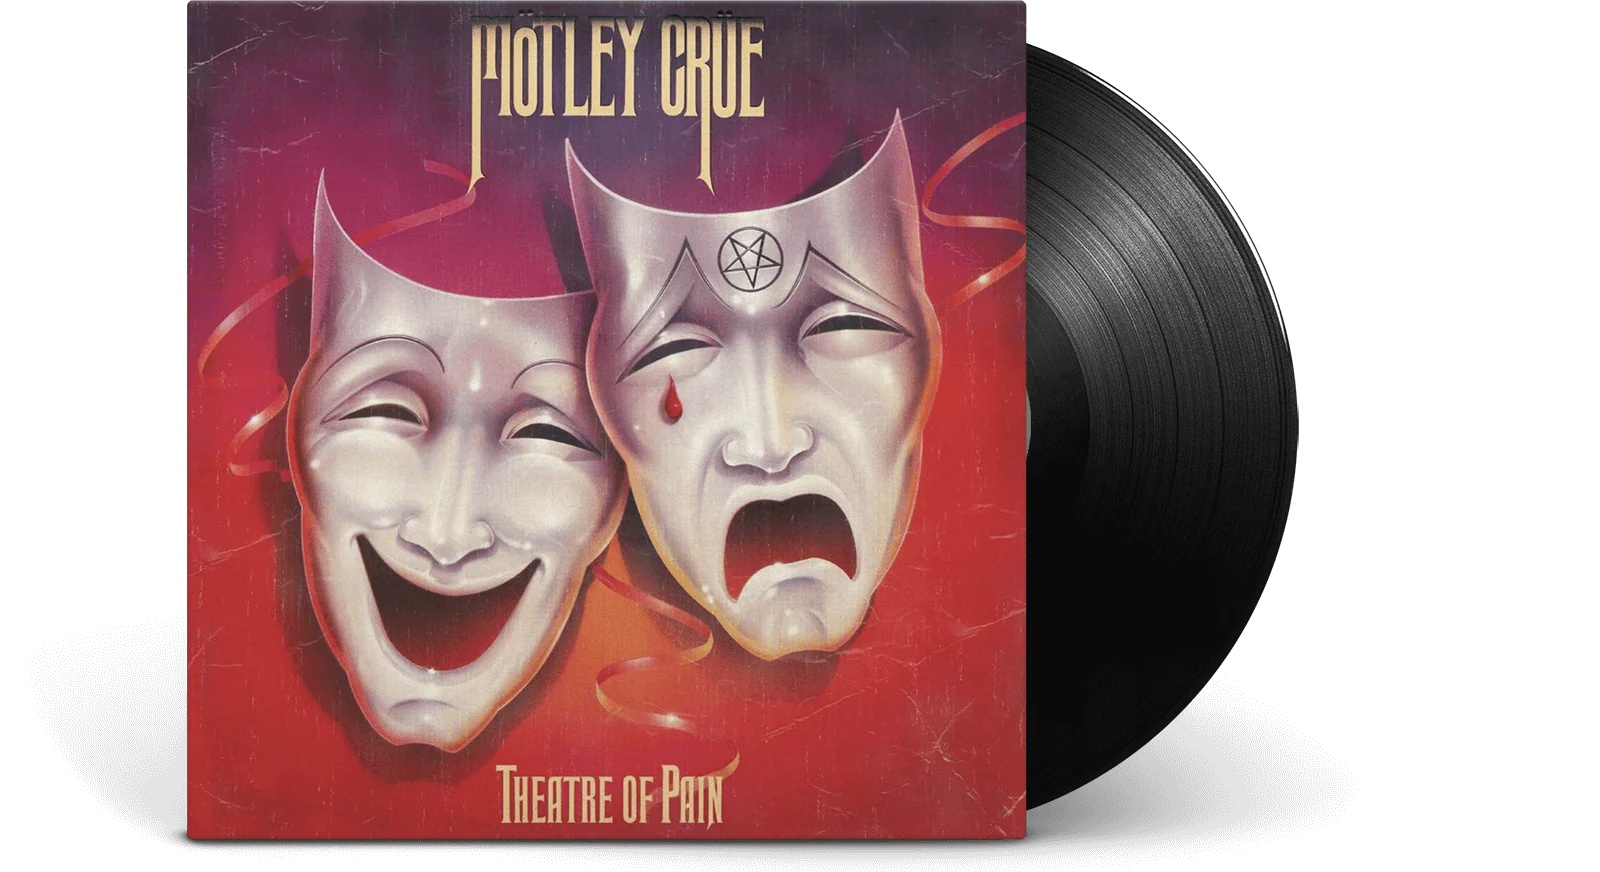 Mötley Crüe "Theatre of Pain" vinyl